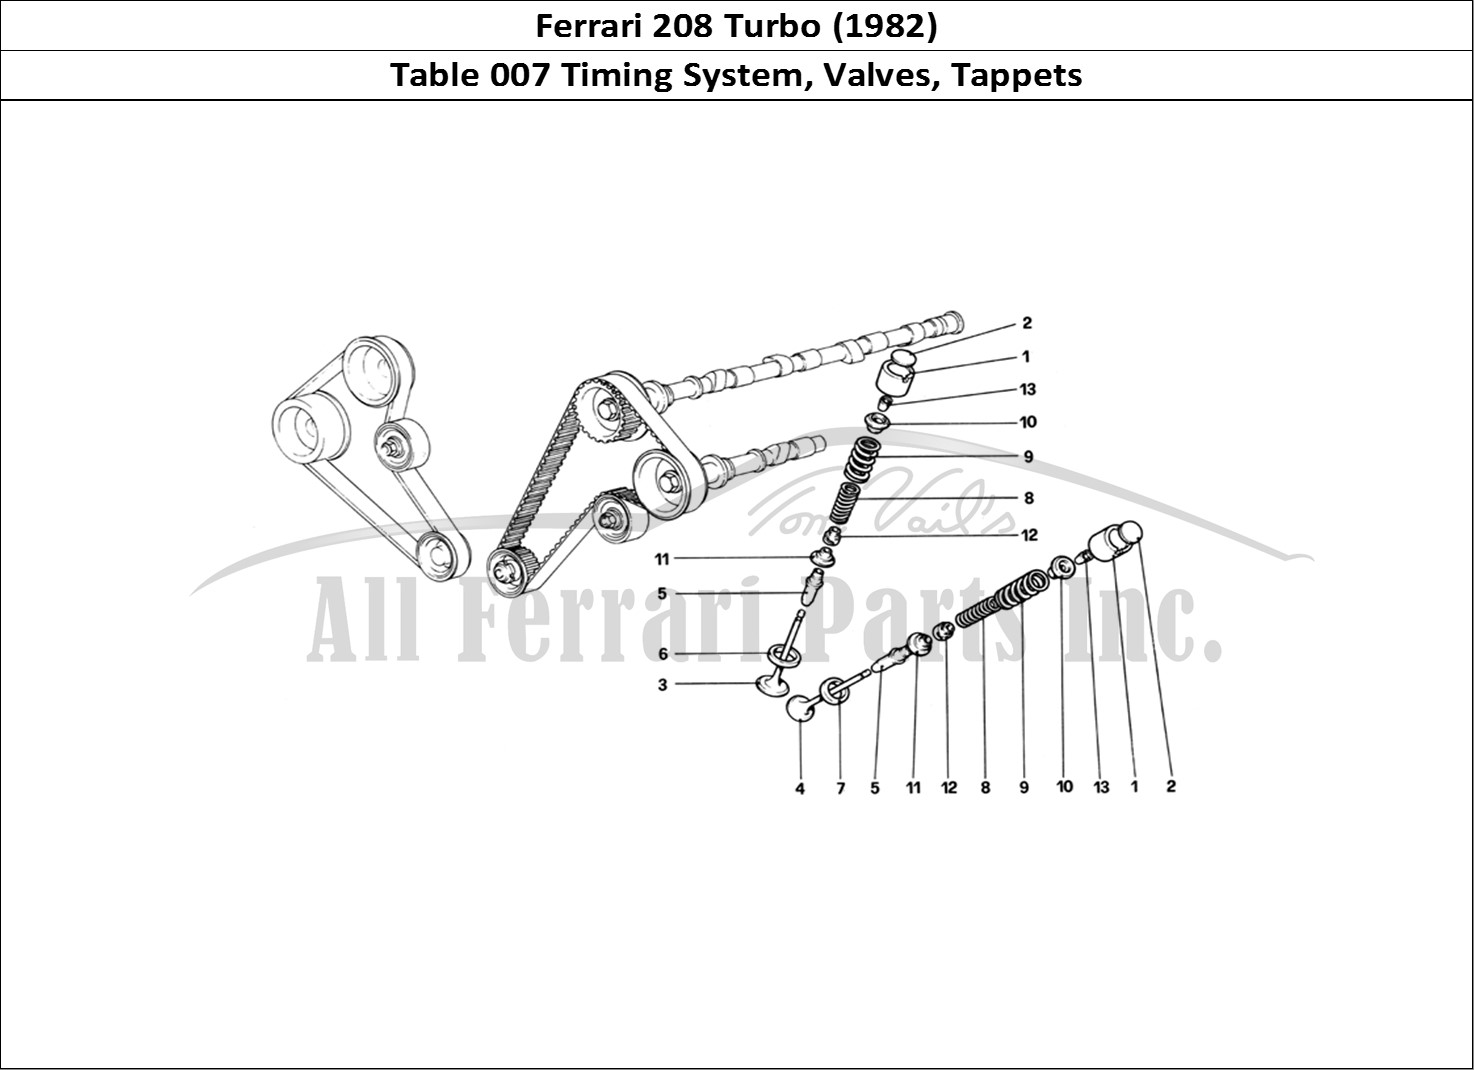 Ferrari Parts Ferrari 208 Turbo (1982) Page 007 Timing System - Tappets